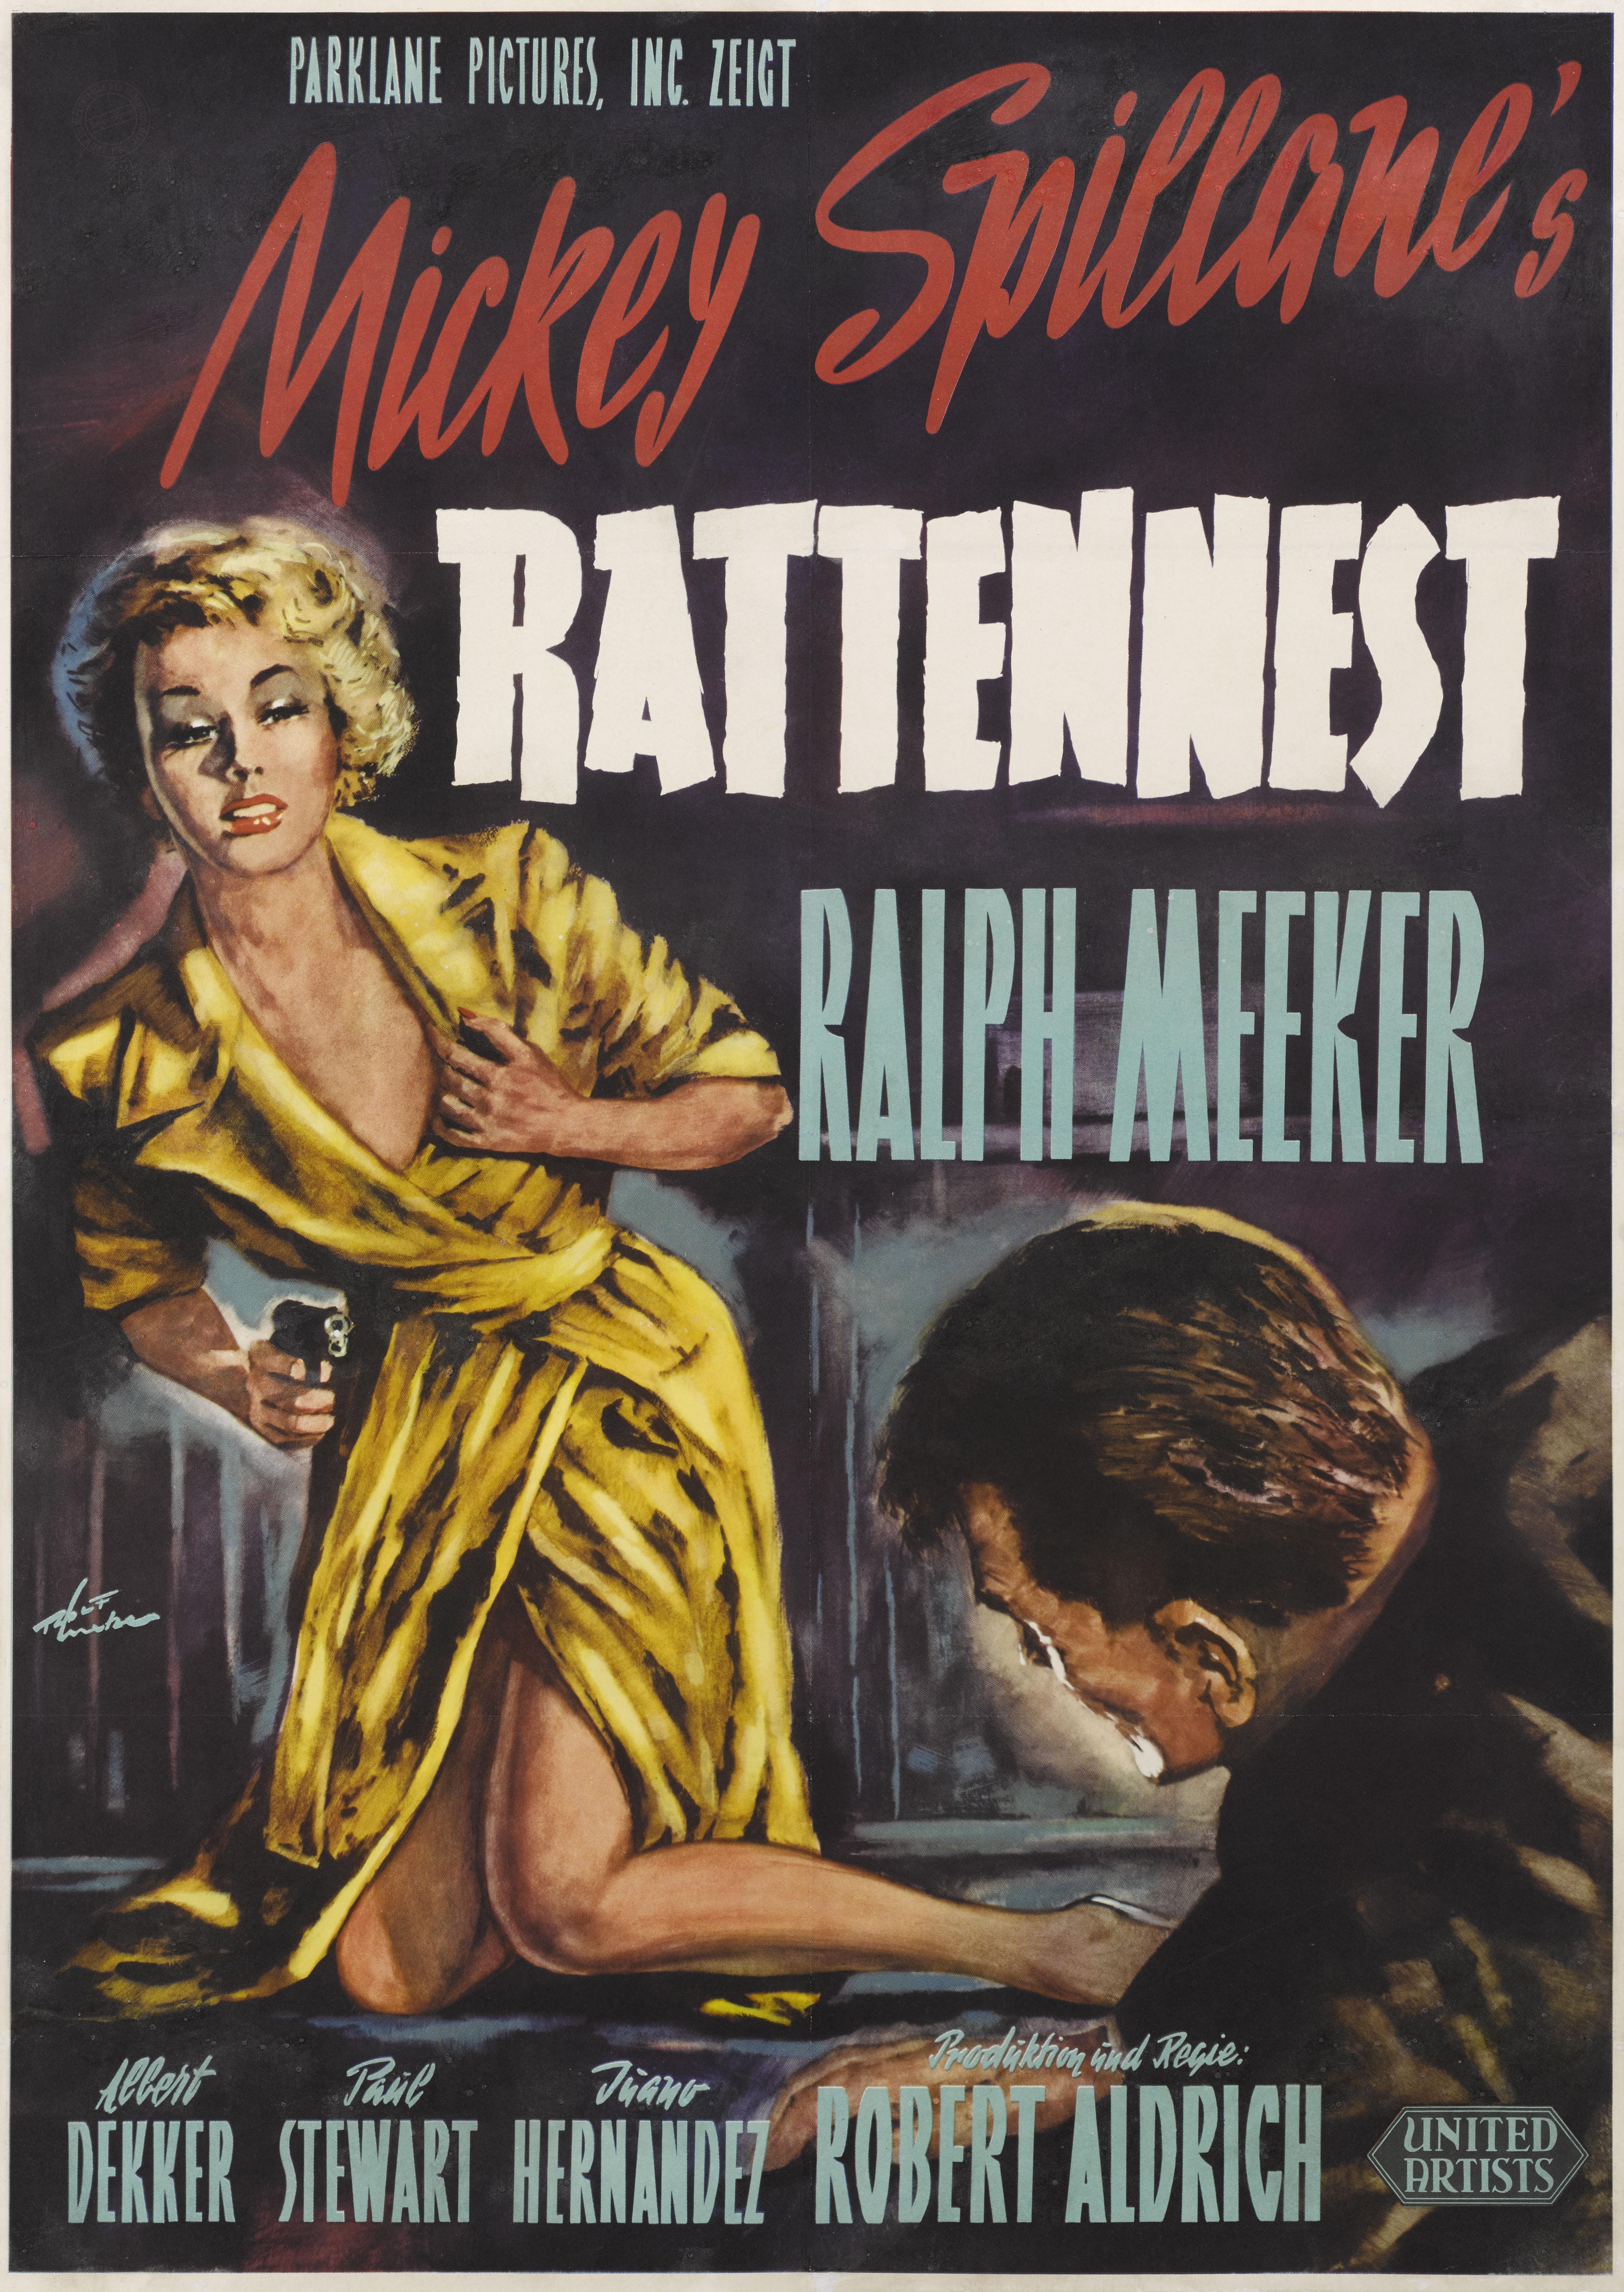 Original German film poster for Robert Aldrich's 1955 Film Noir Kiss Me Deadly.
The film was directed by Robert Aldrich and starred Ralph Meeker, Albert Dekker, Paul Stewart.
The film is based on Mickey Spillane's Mike Hammer novel and considered